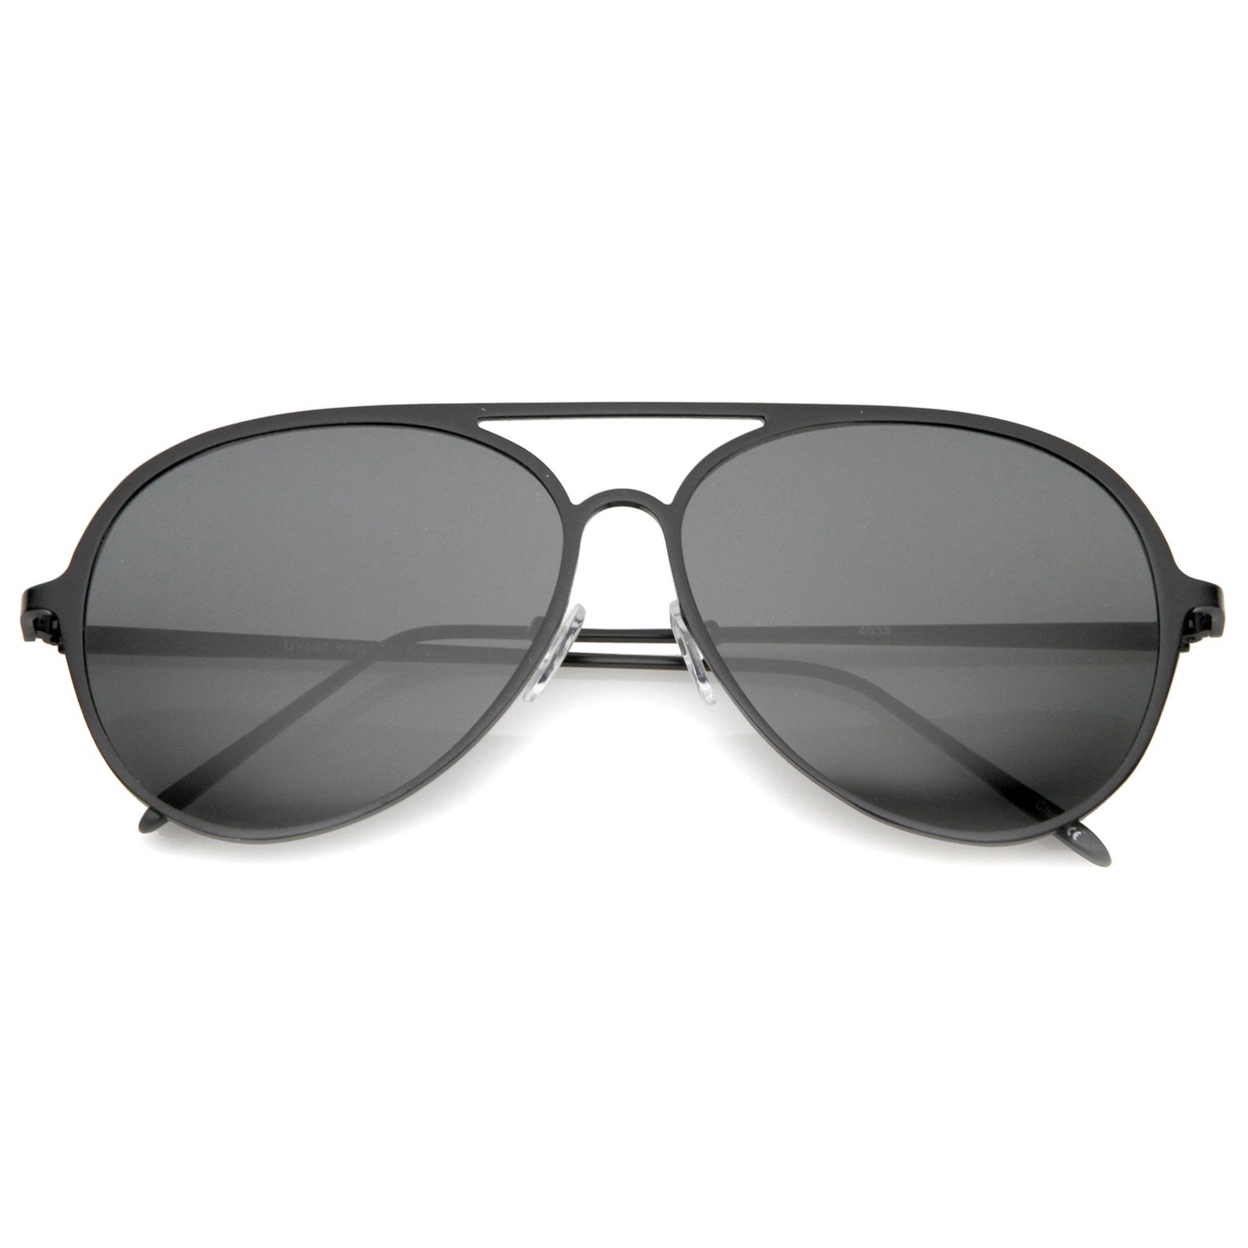 Oversize Metal Frame Double Nose Bridge Slim Temple Aviator Sunglasses 58mm - Shiny Gold / Amber